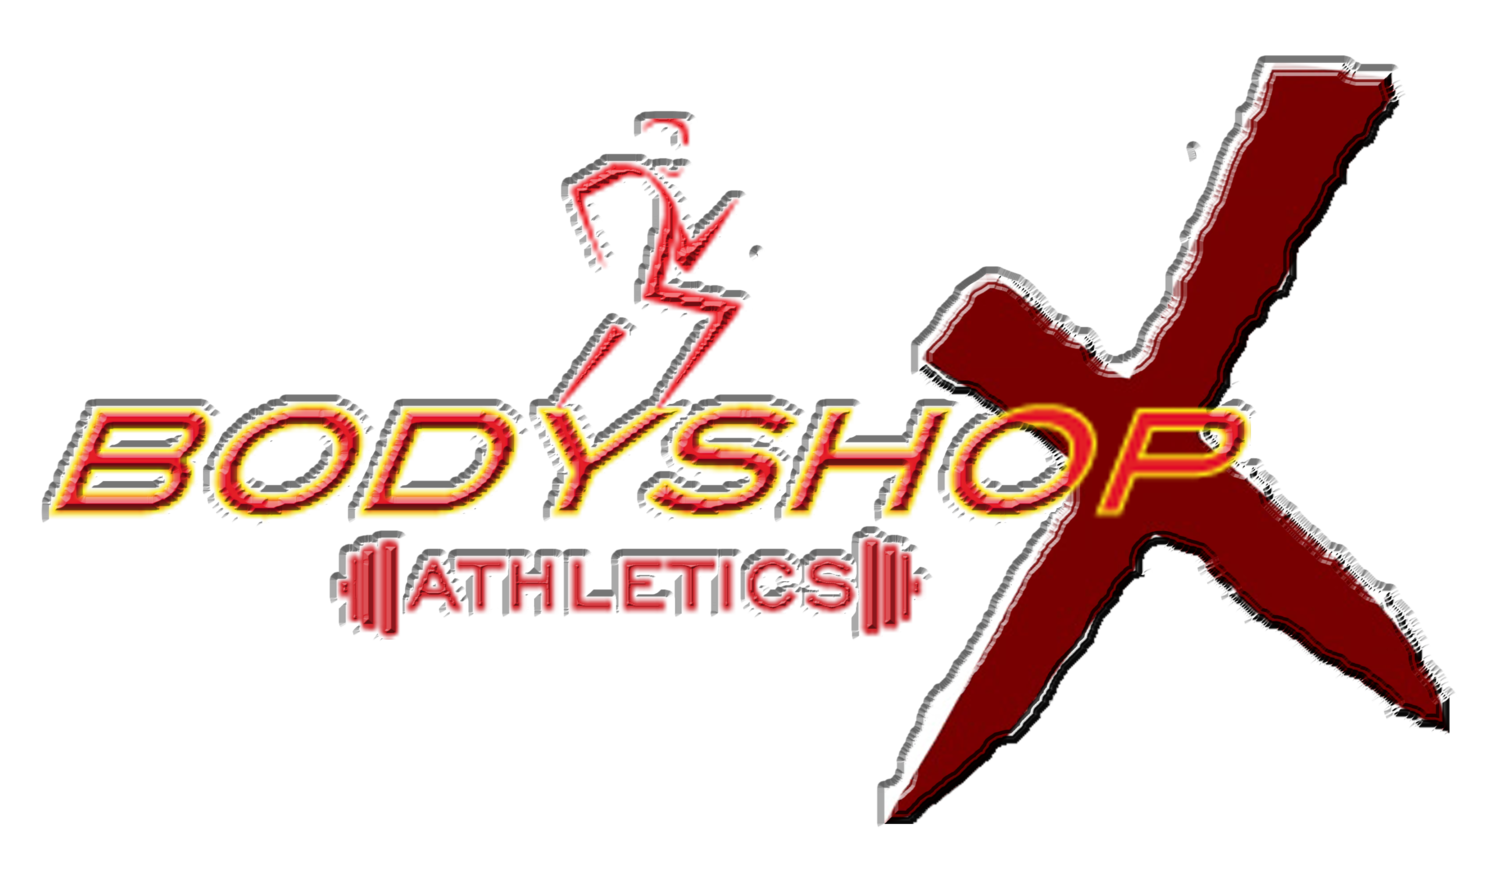 Bodyshop Athletics X